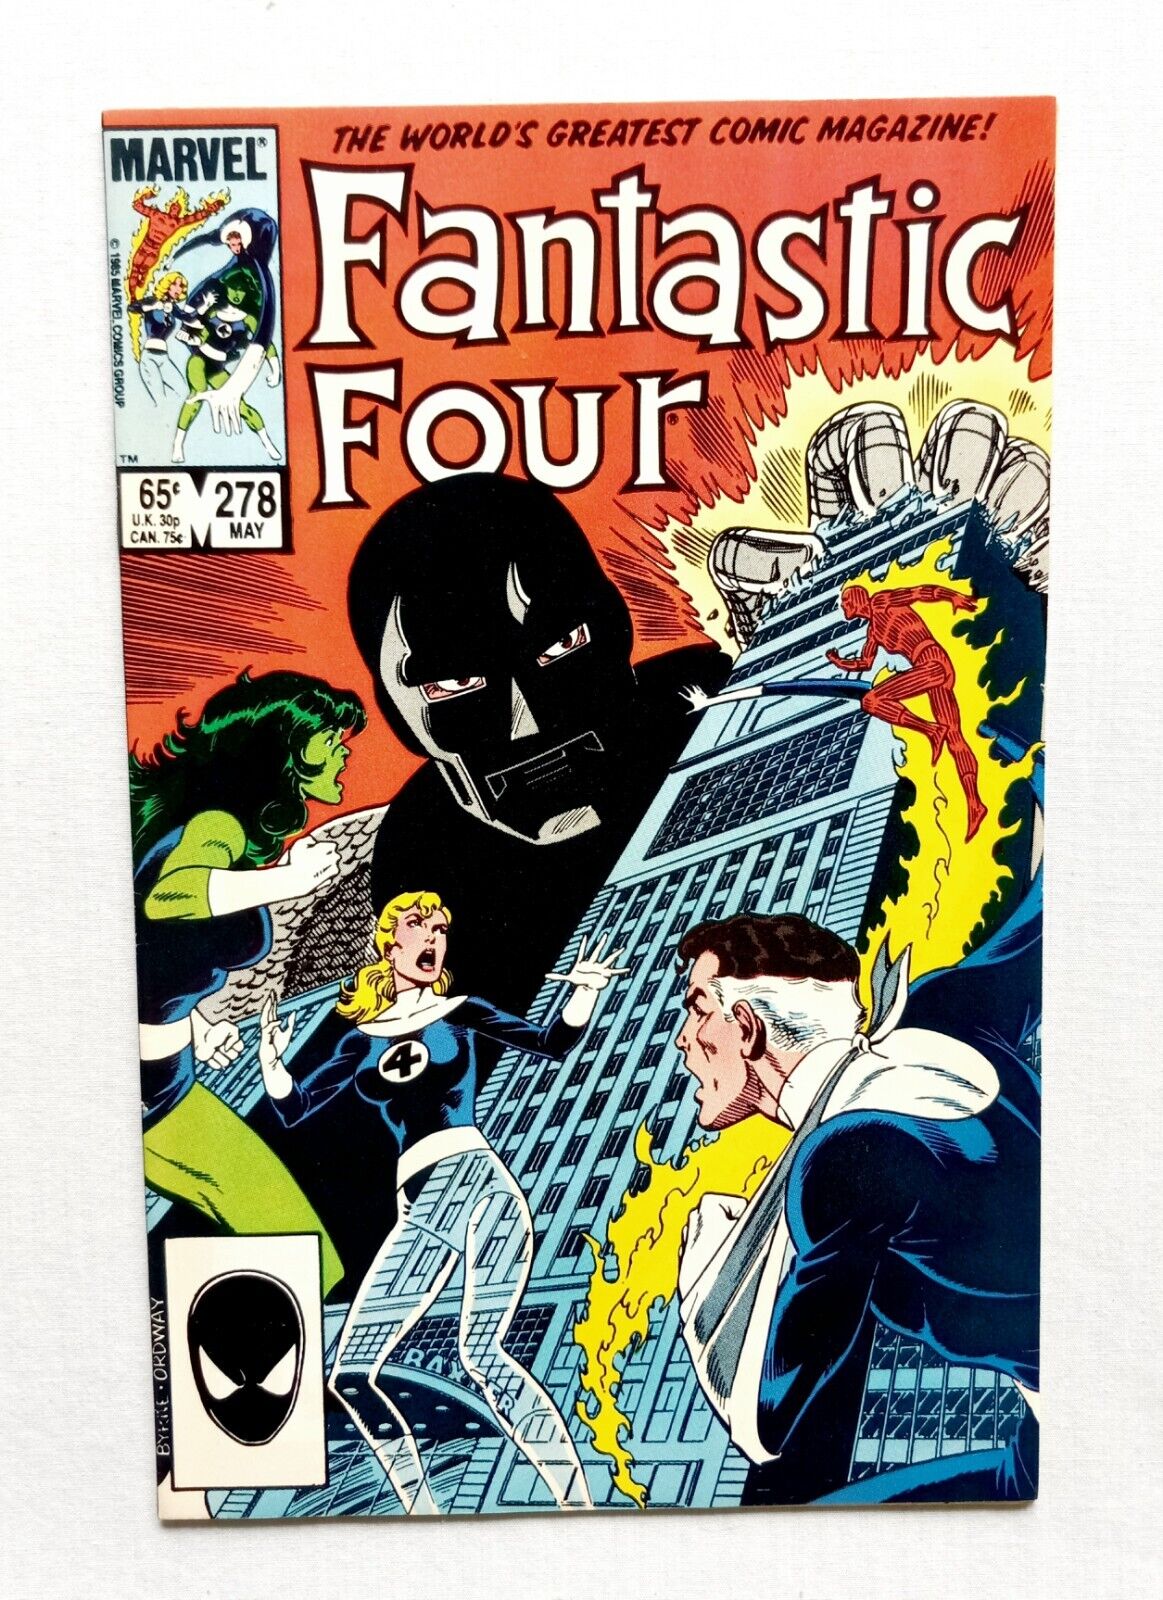  Fantastic Four #278 - Origin of Dr. Doom Controversial Racist Word Issue 1985 